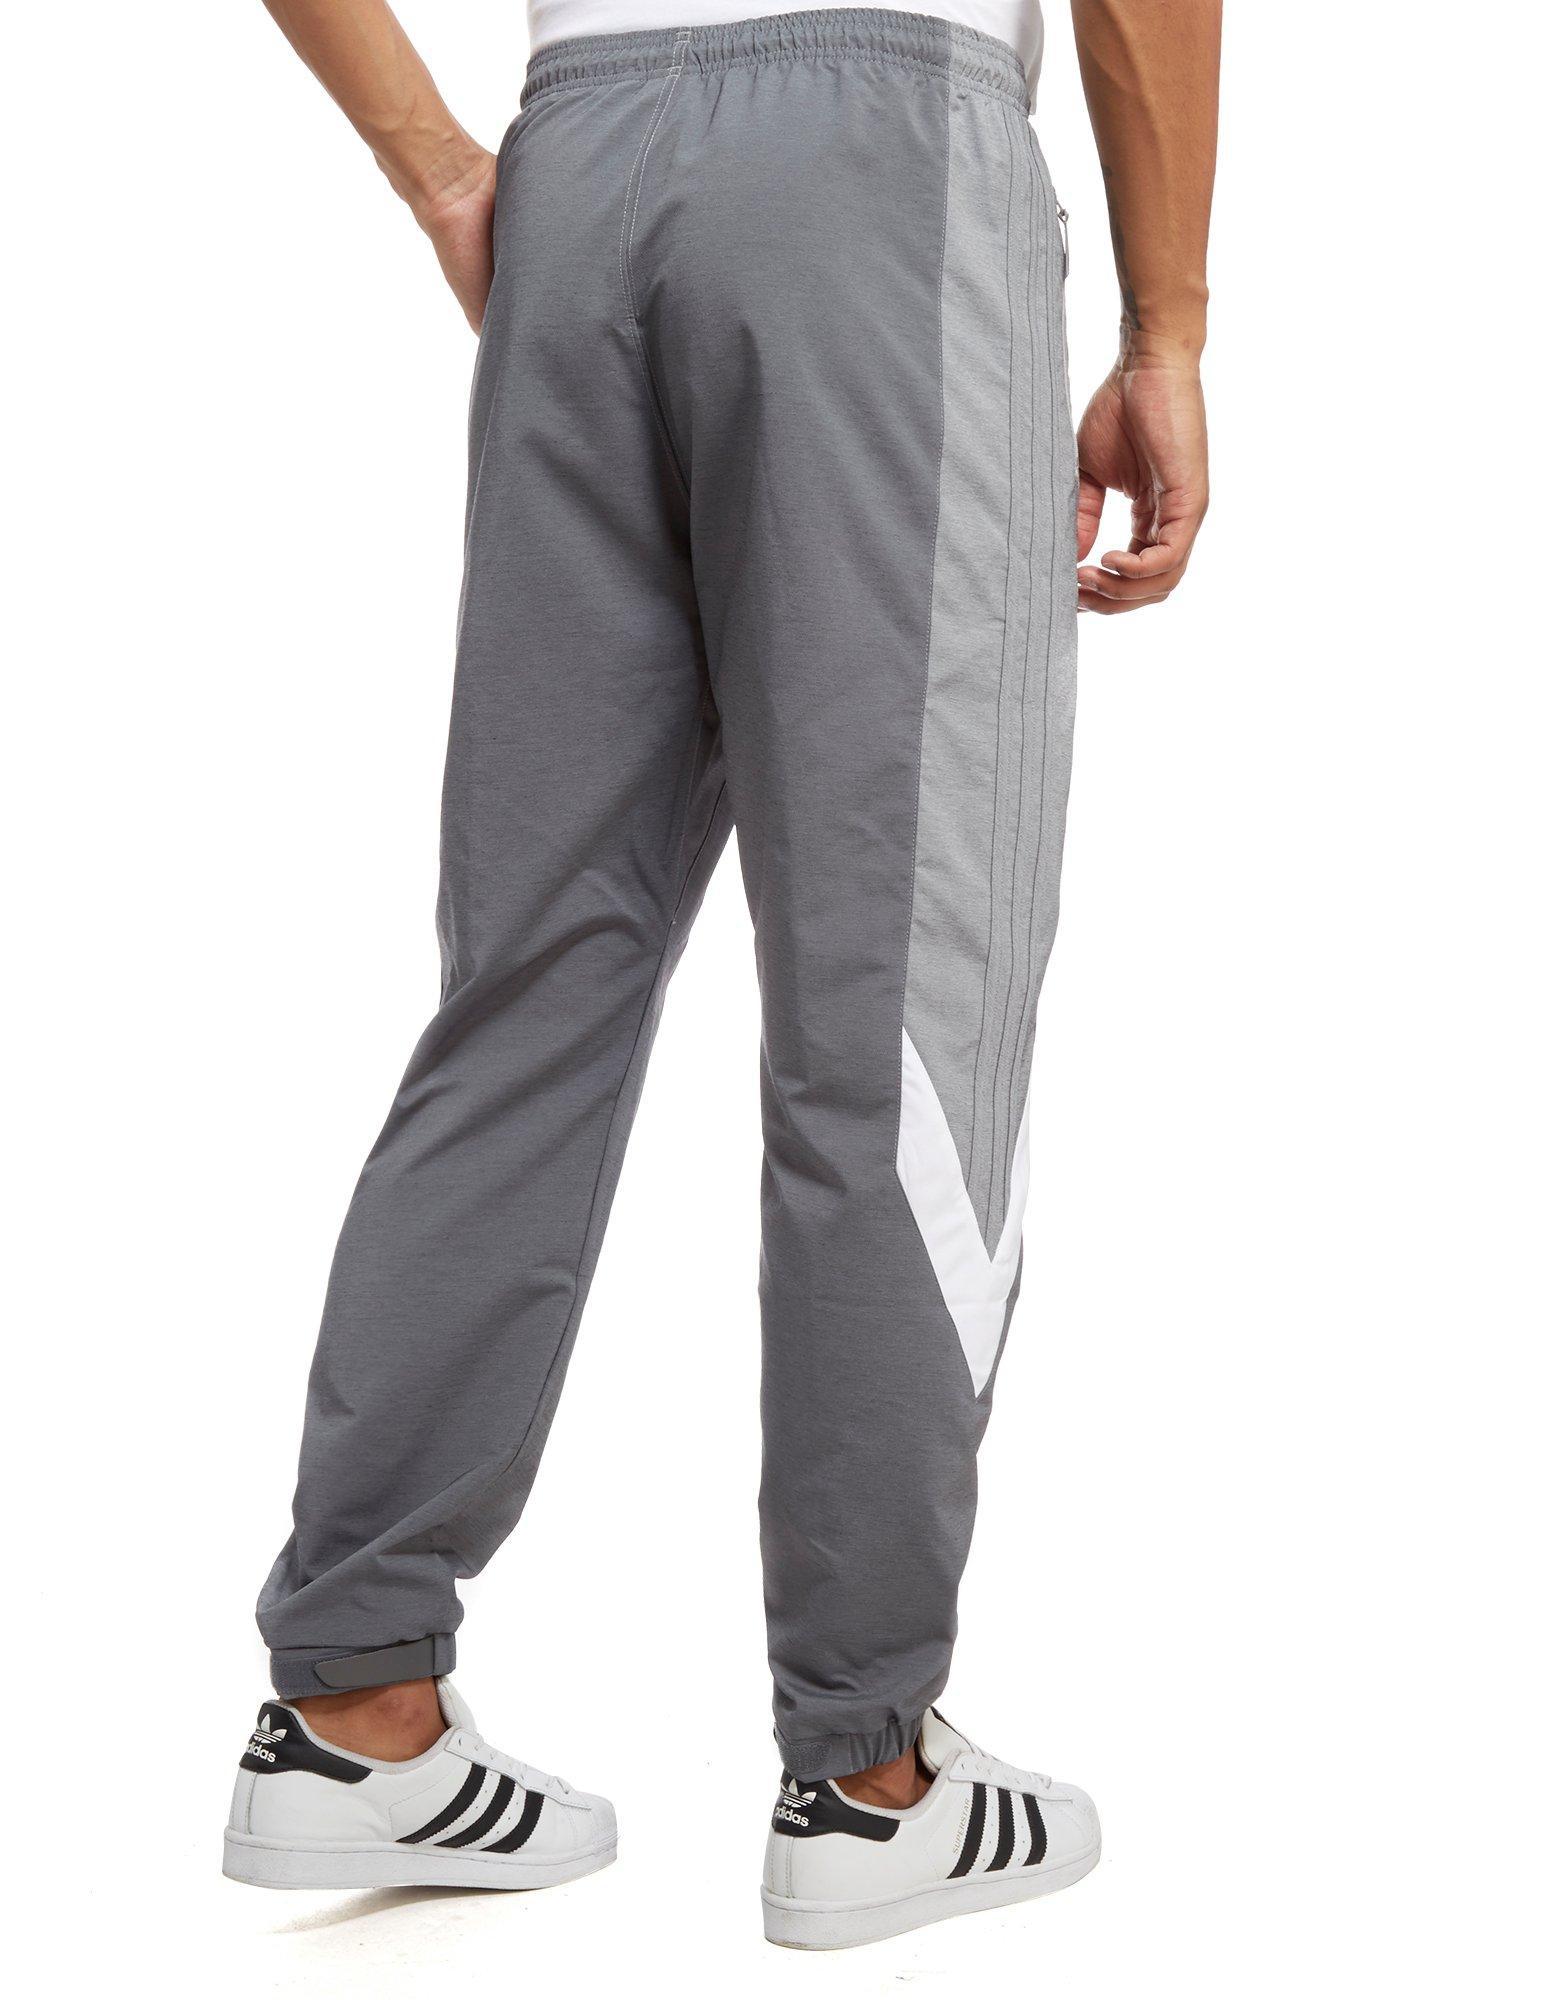 adidas Originals Synthetic Nova Woven Pants in Grey (Gray) for Men - Lyst